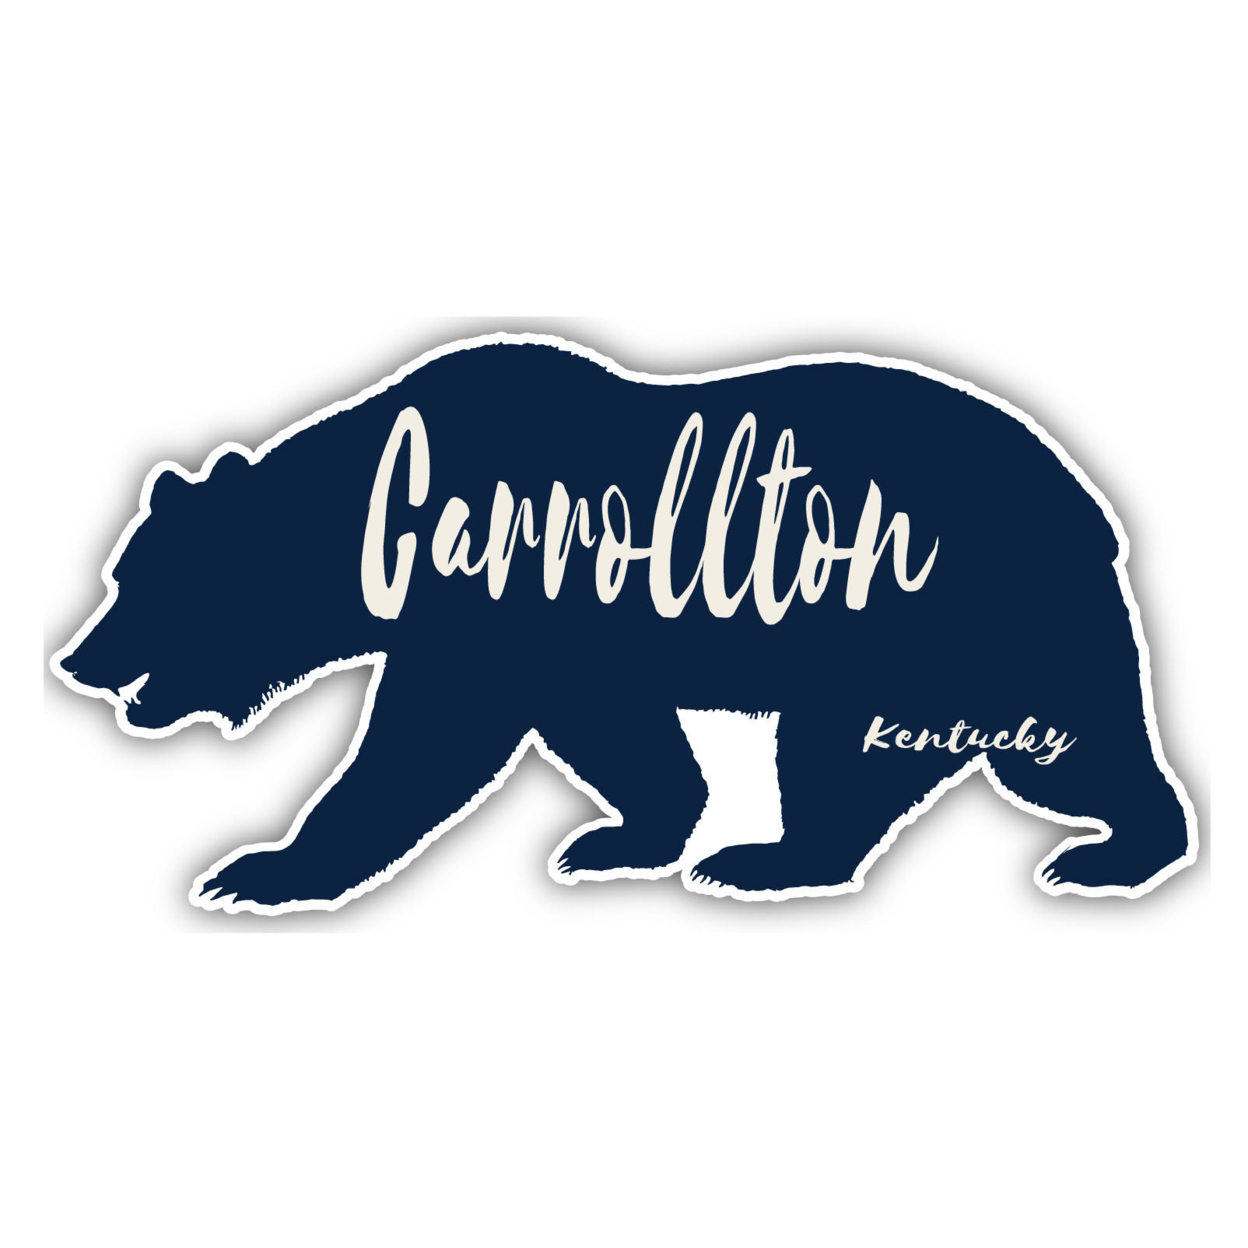 Carrollton Kentucky Souvenir Decorative Stickers (Choose Theme And Size) - 4-Pack, 4-Inch, Bear